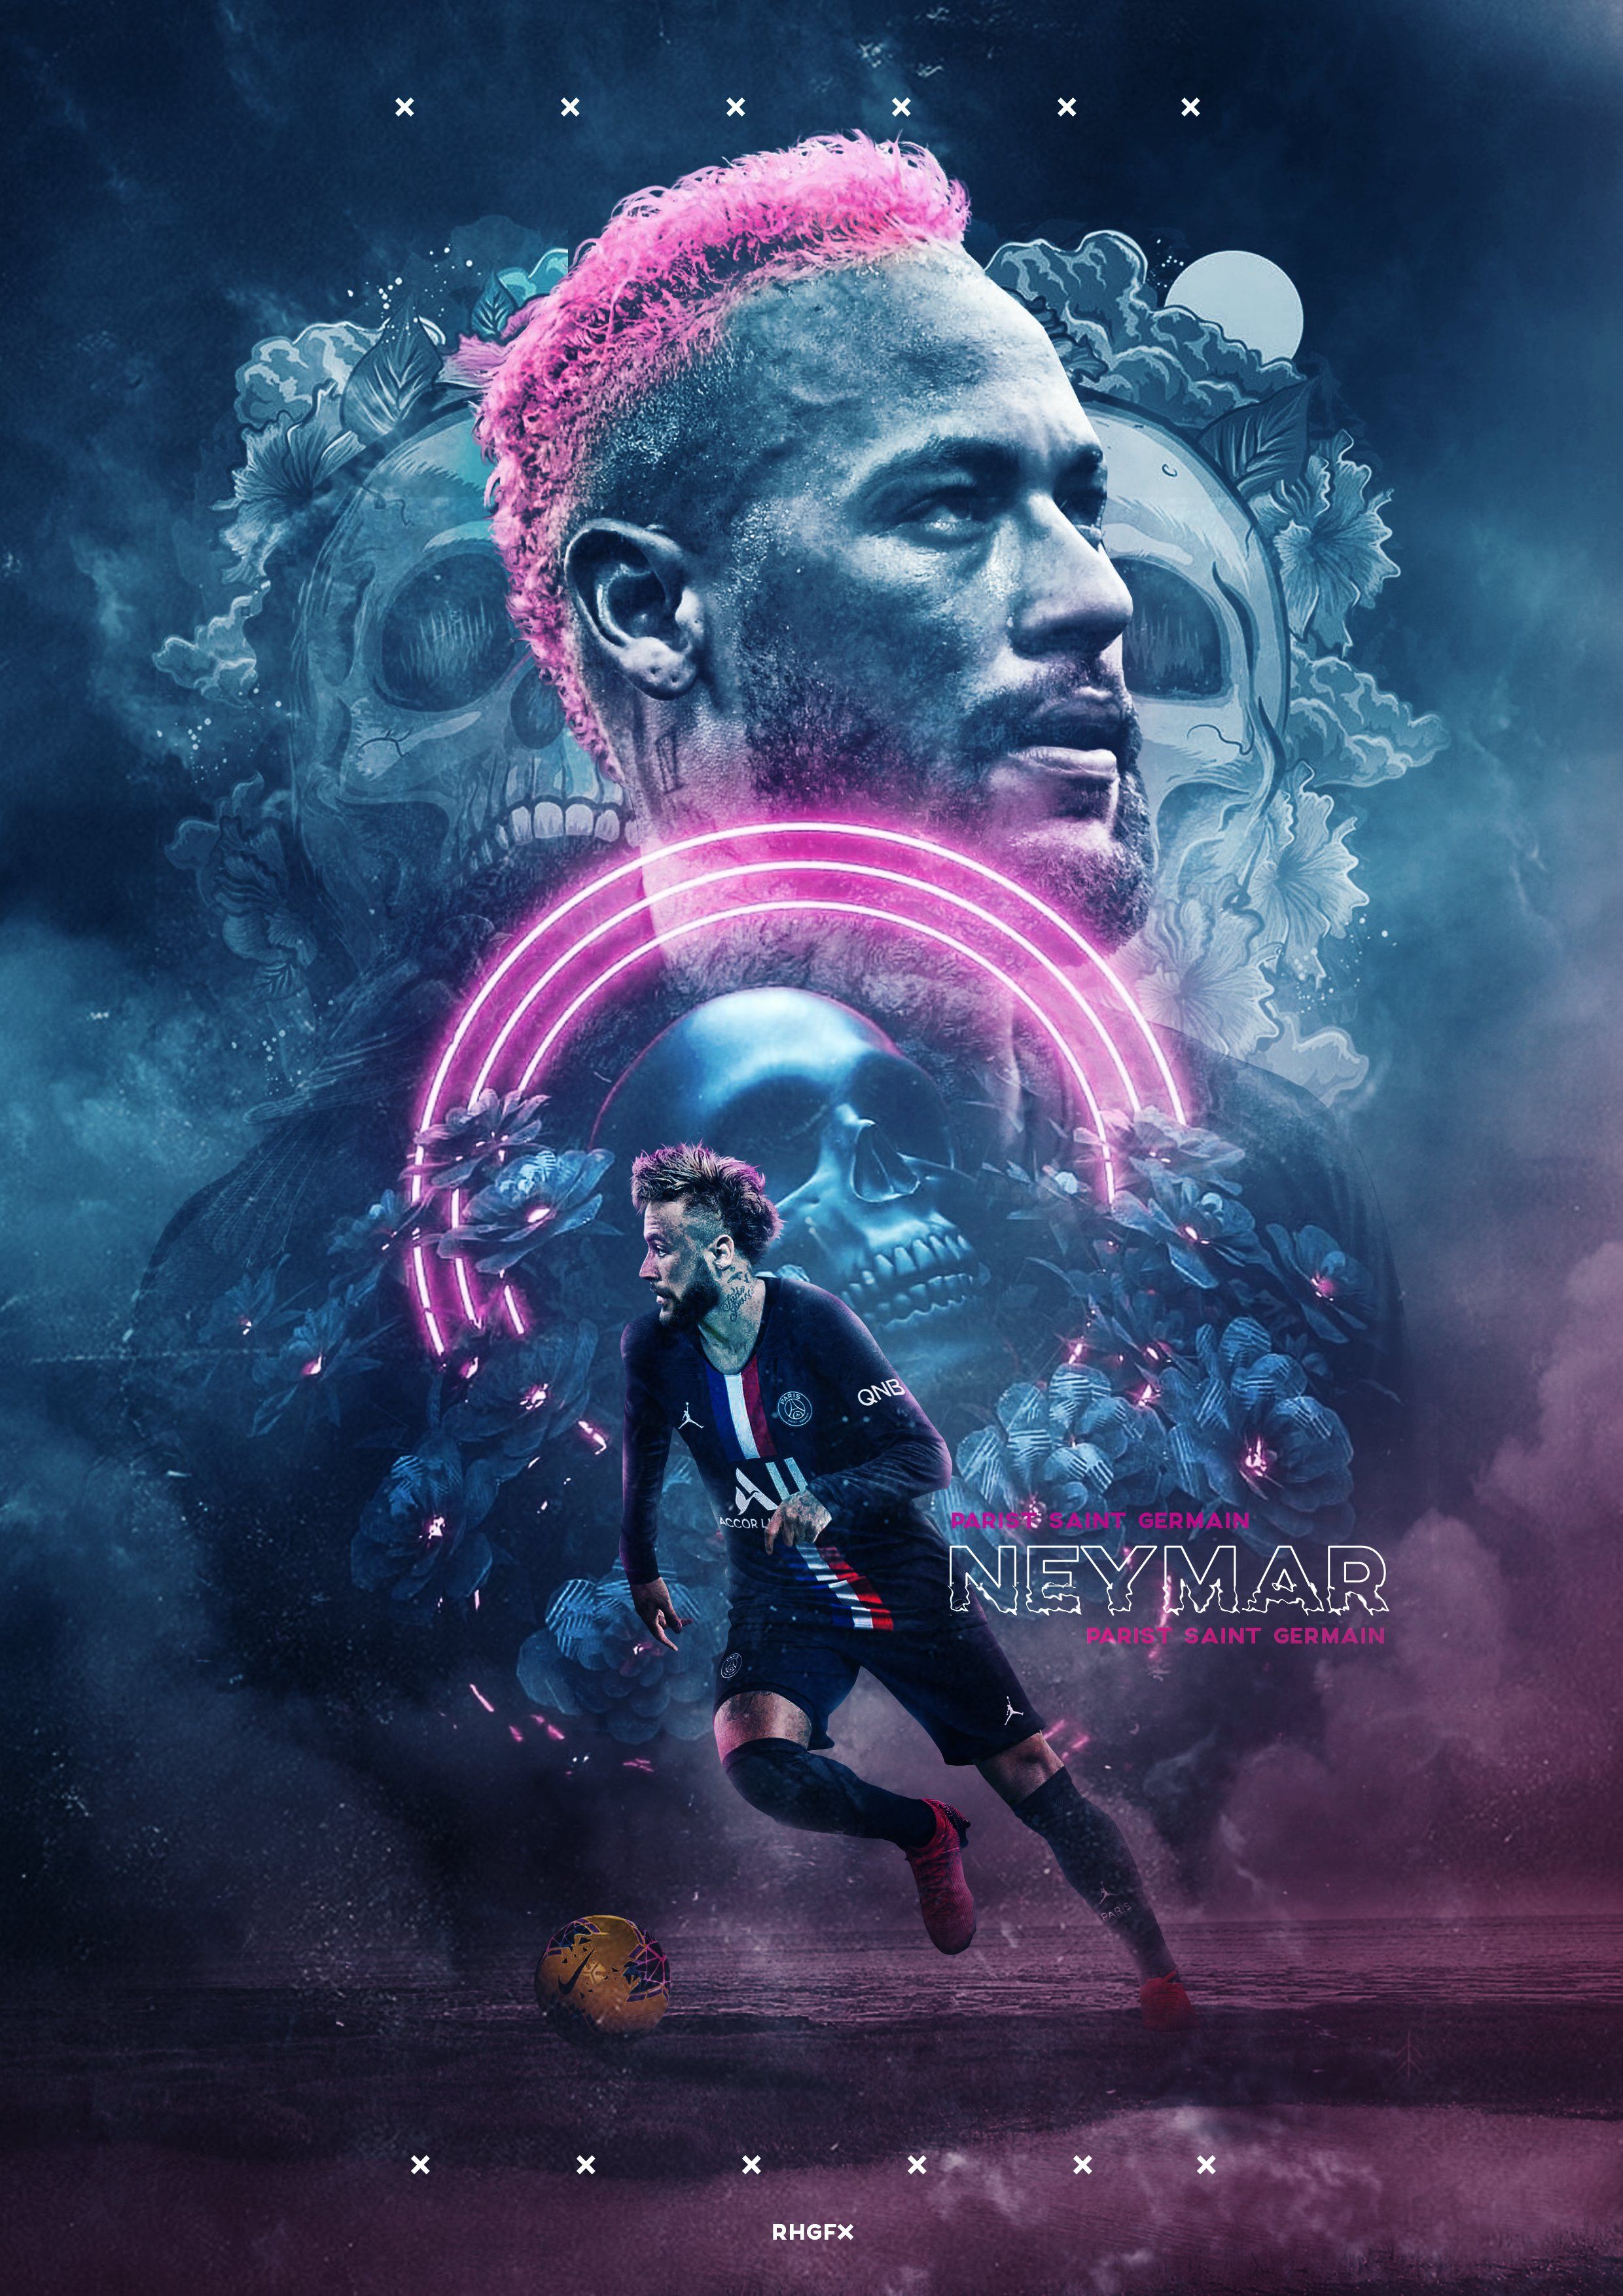 Aesthetic Style Wallpaper. #psg # neymar #Neymar